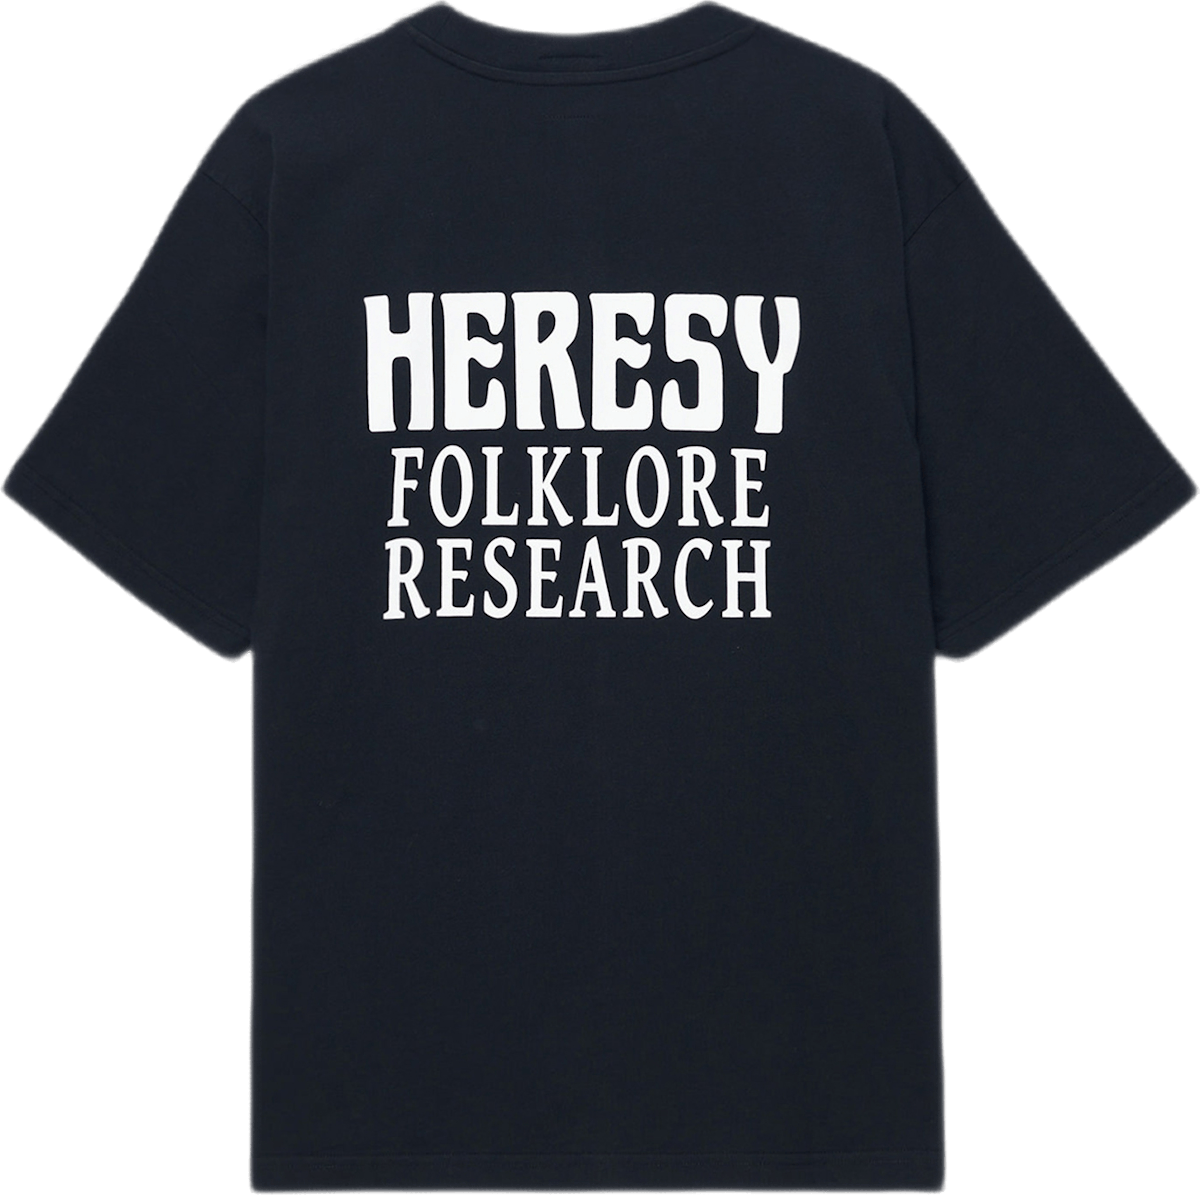 Research Ss T-shirt Black